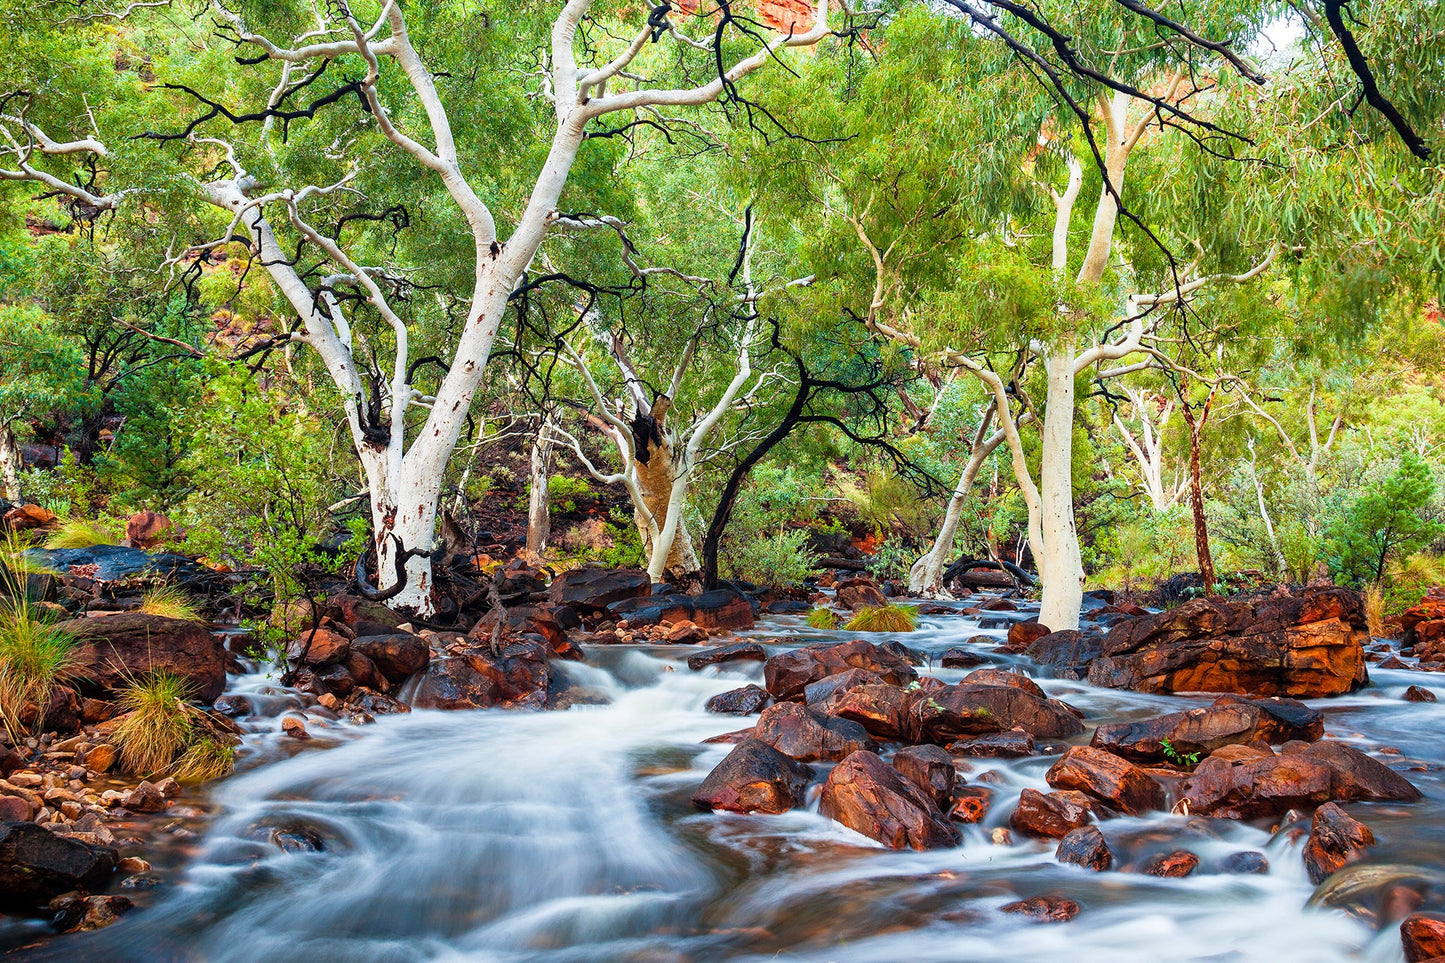 Flow of life - Kings Creek, Kings Canyon Northern Territory